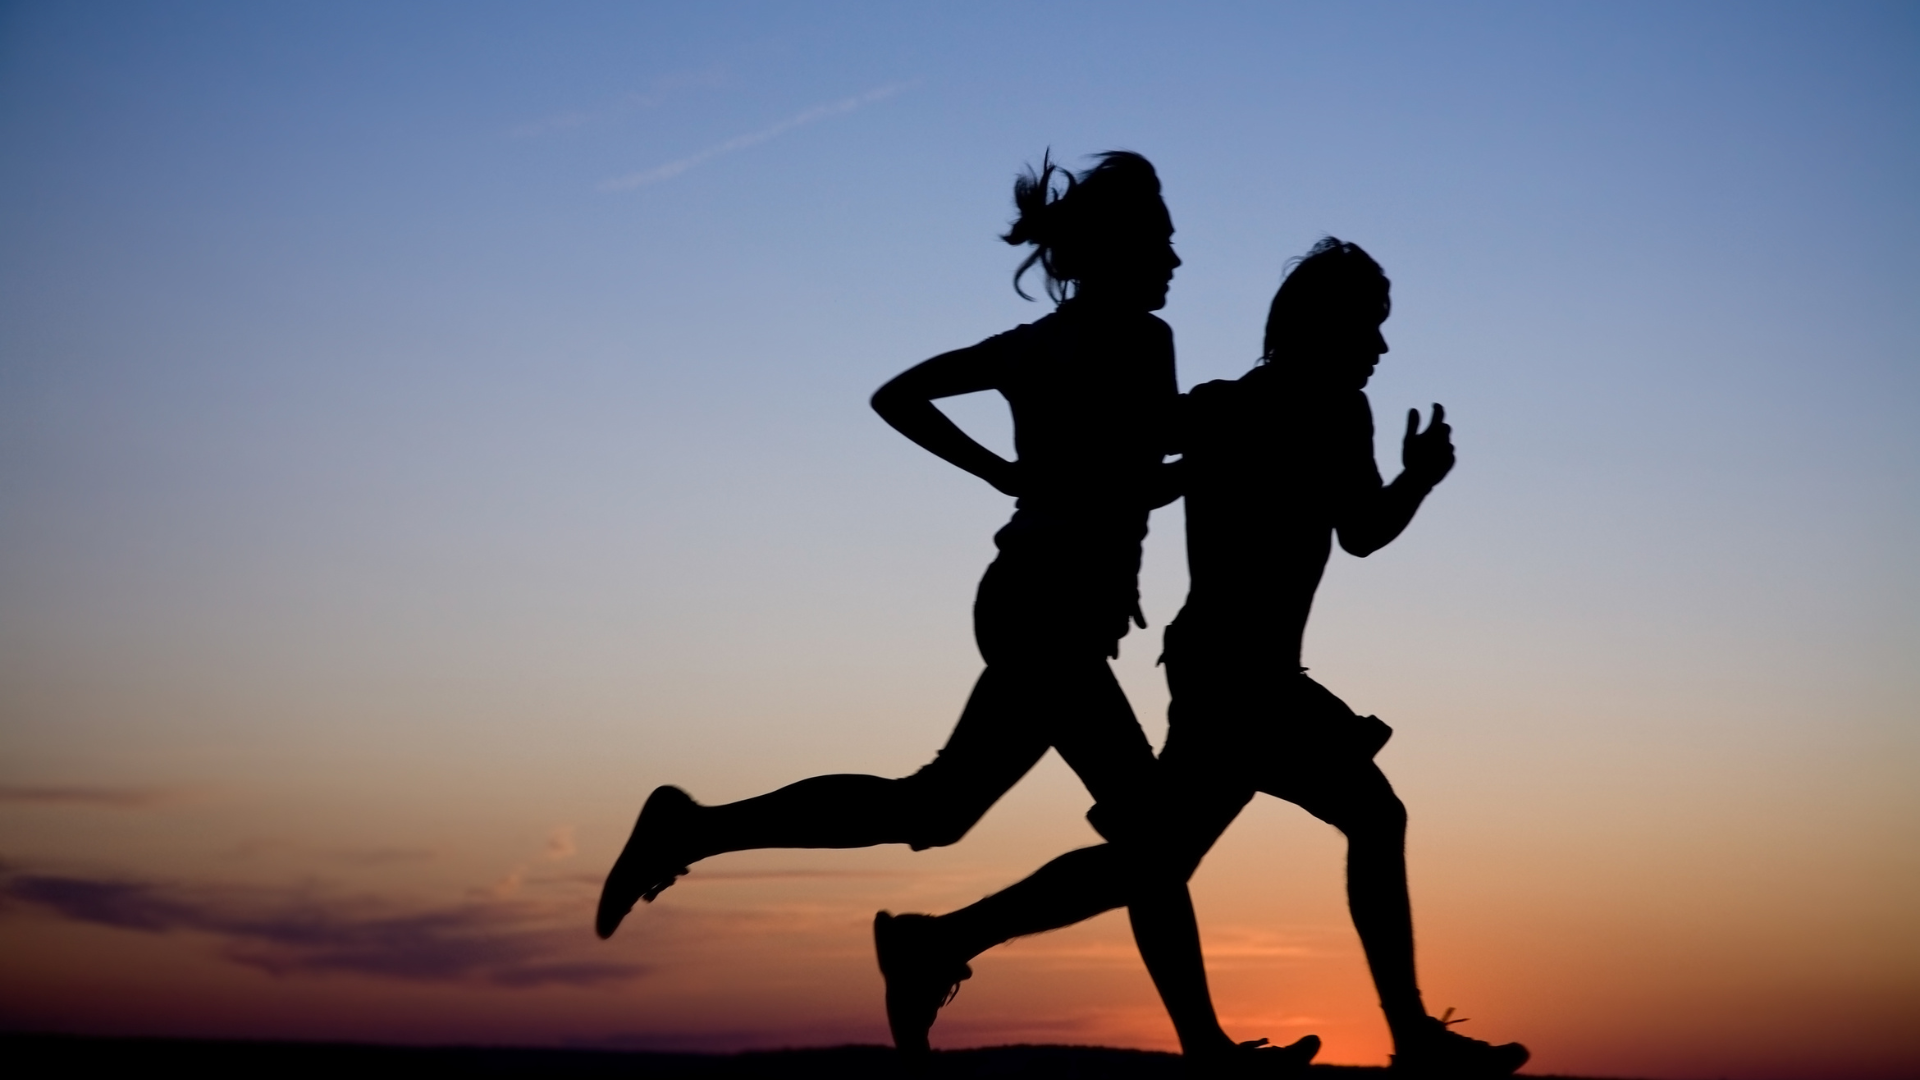 Athletes running and training